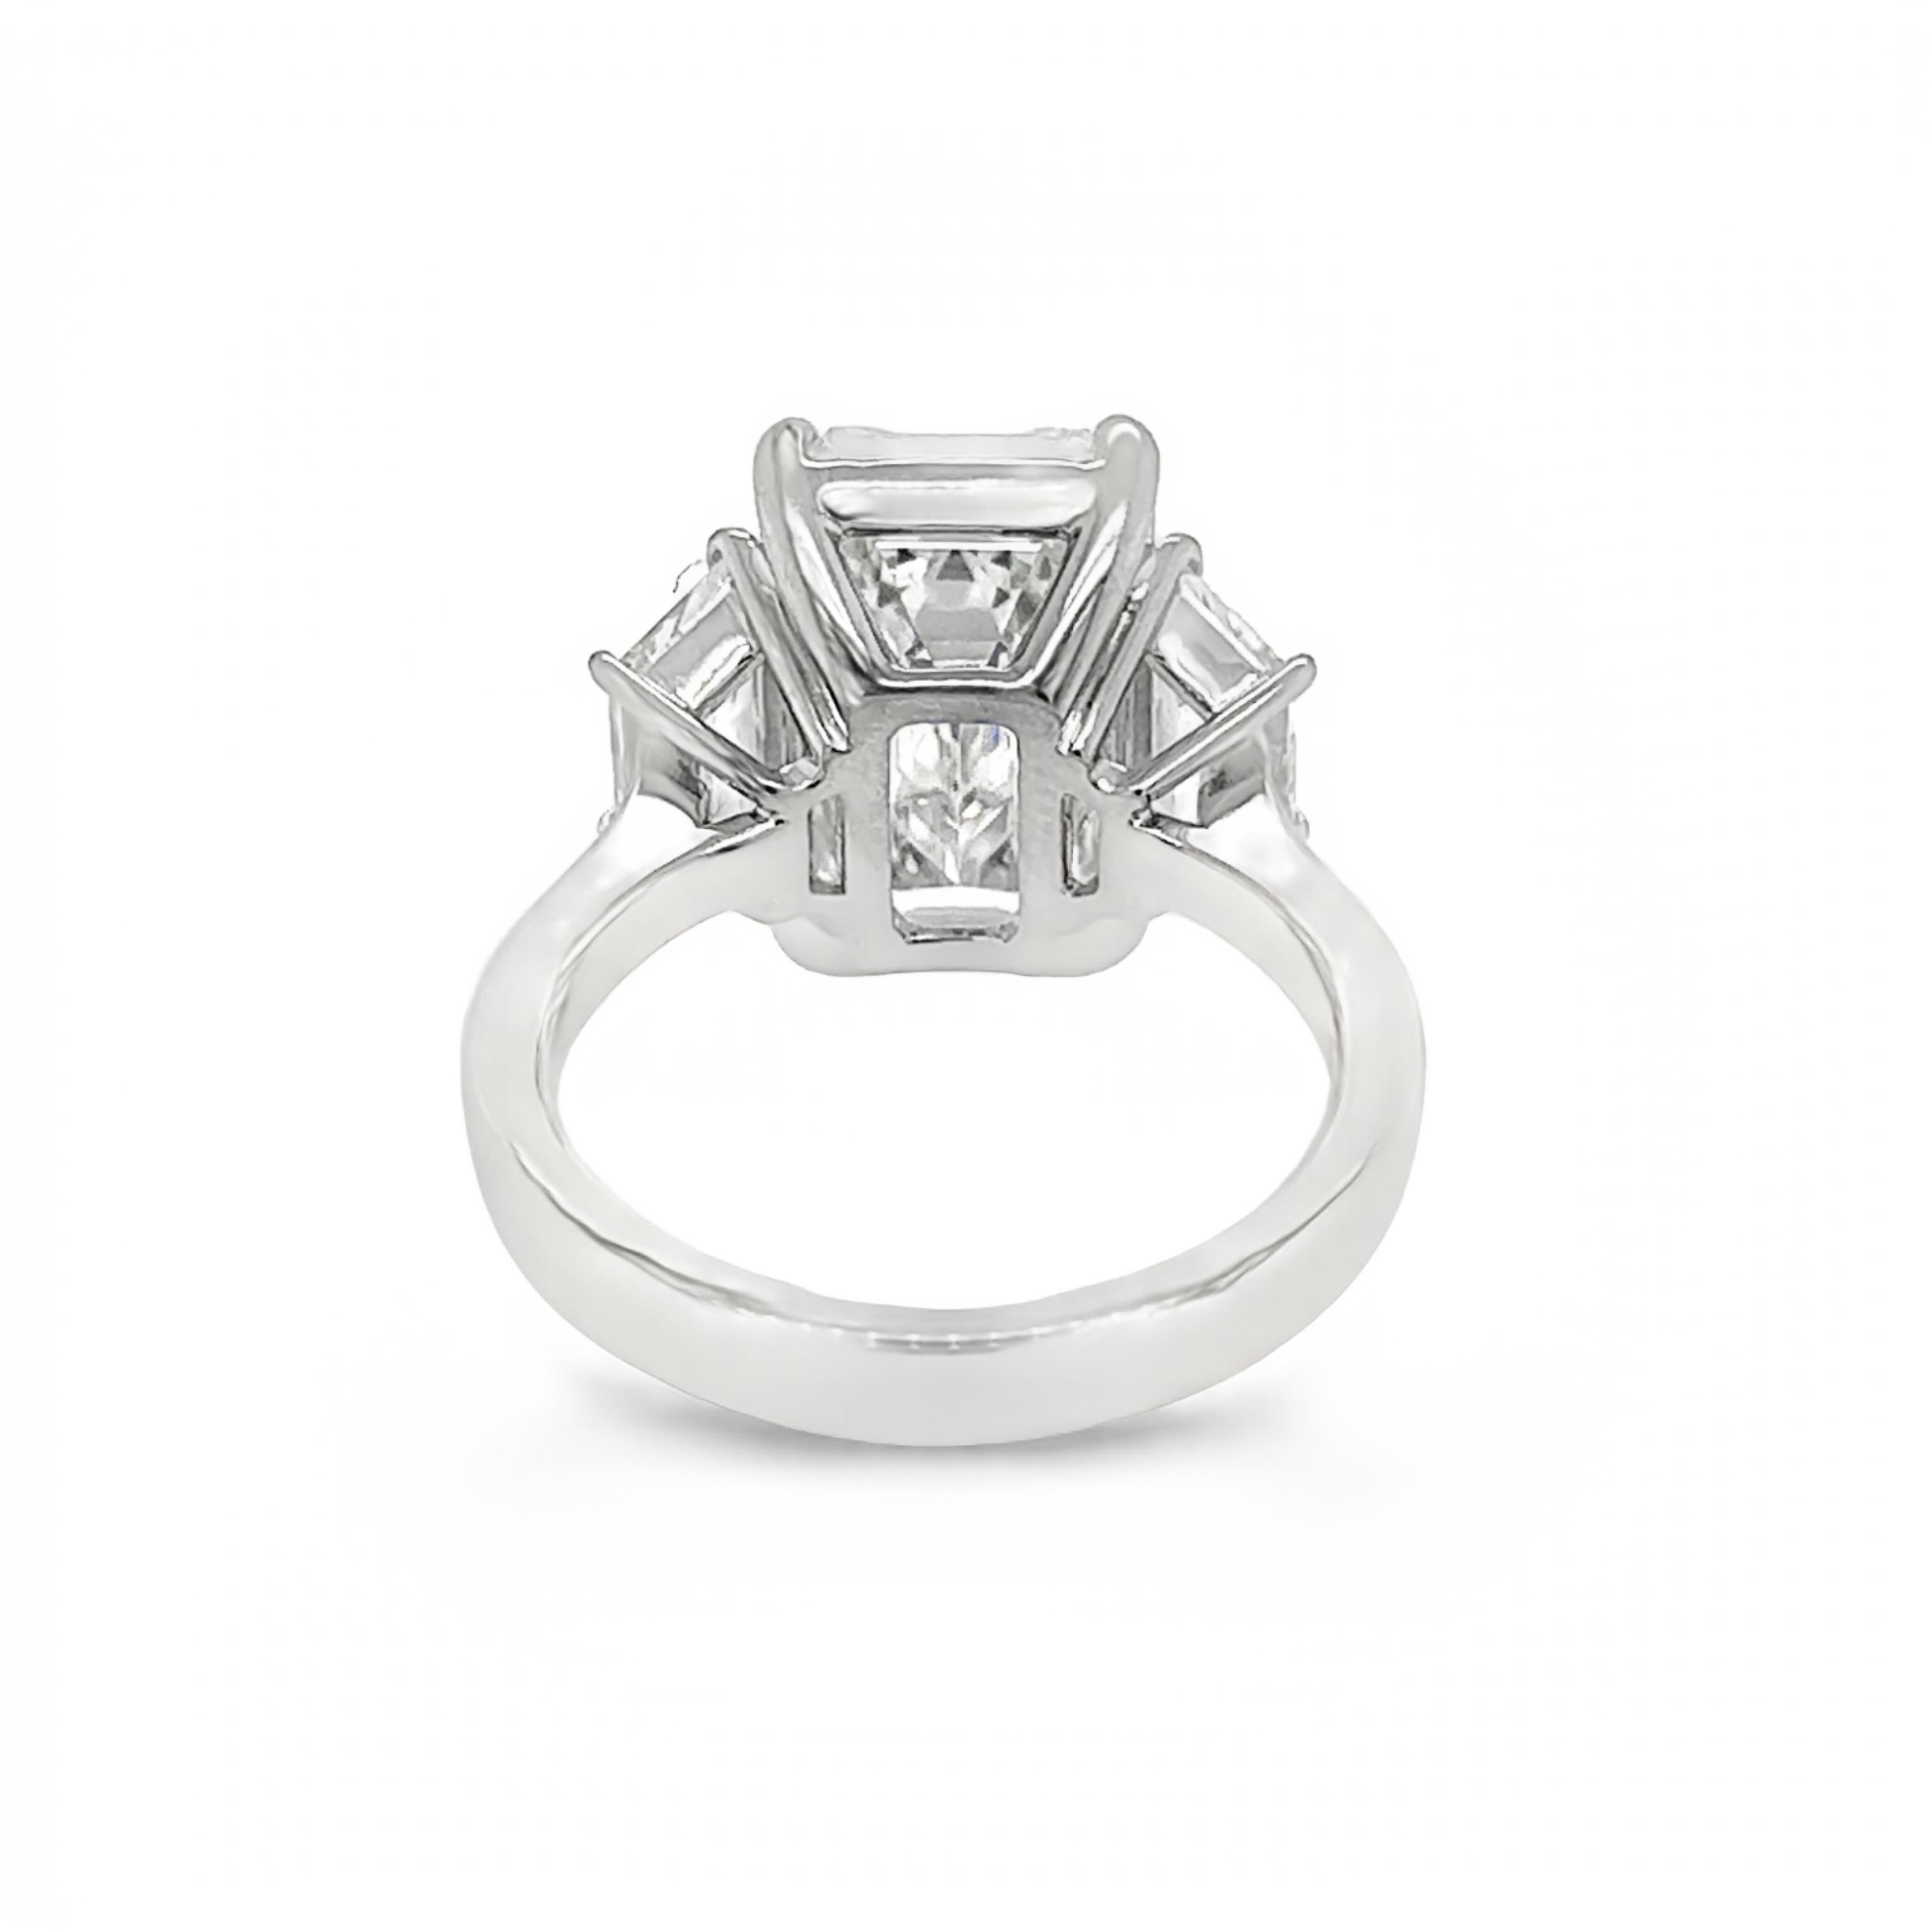 7 carat emerald cut diamond ring